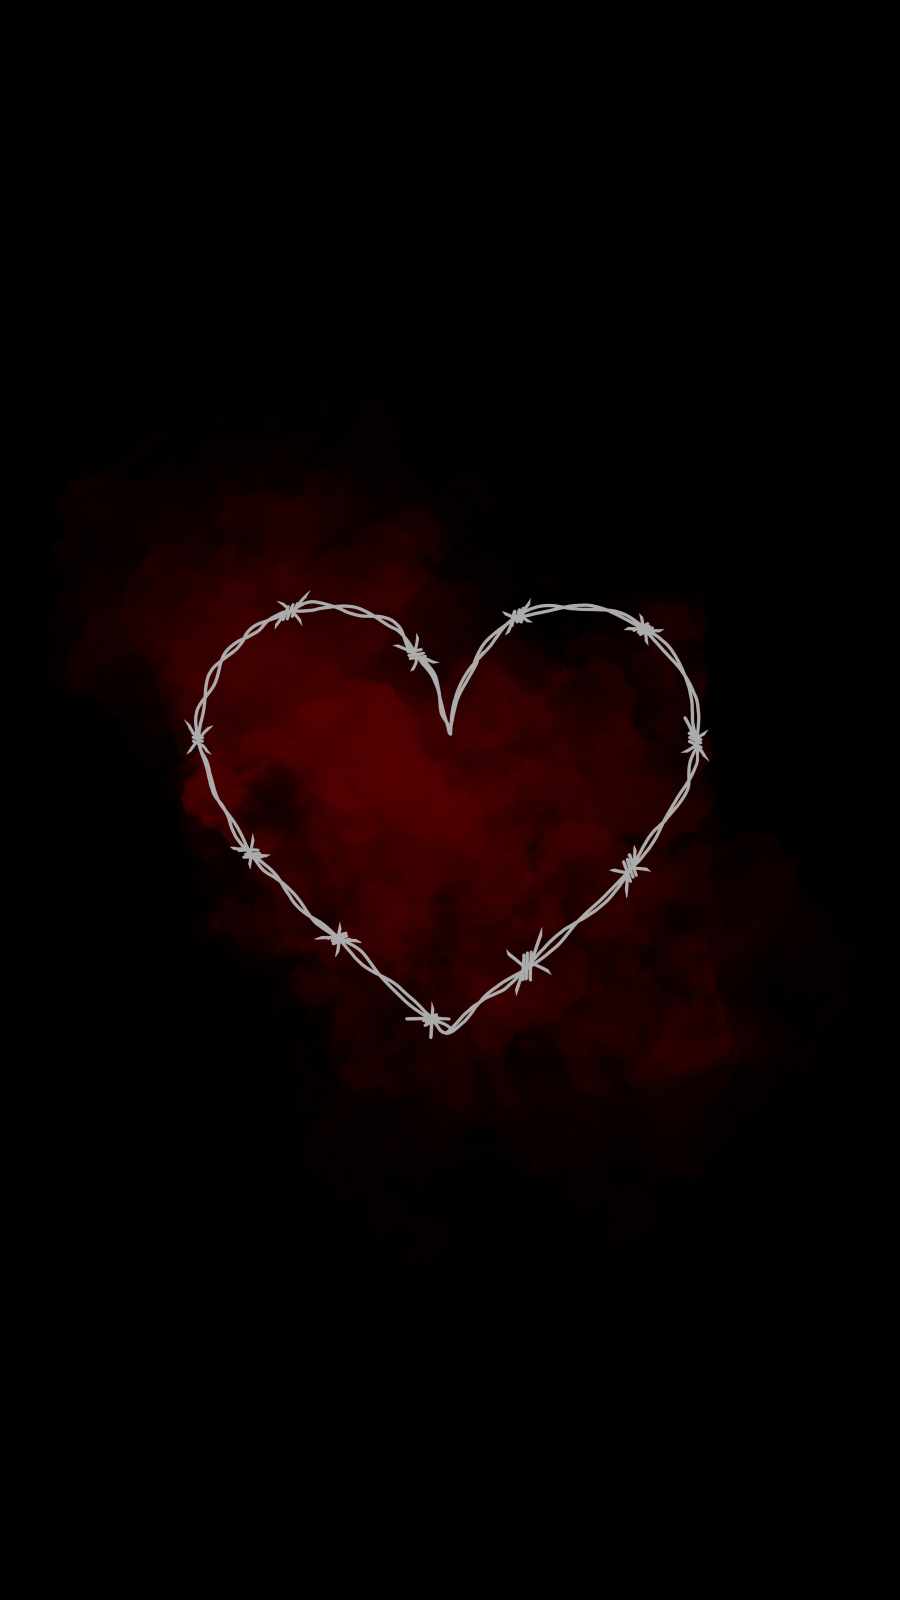 Heart in Razor Wire iPhone Wallpaper